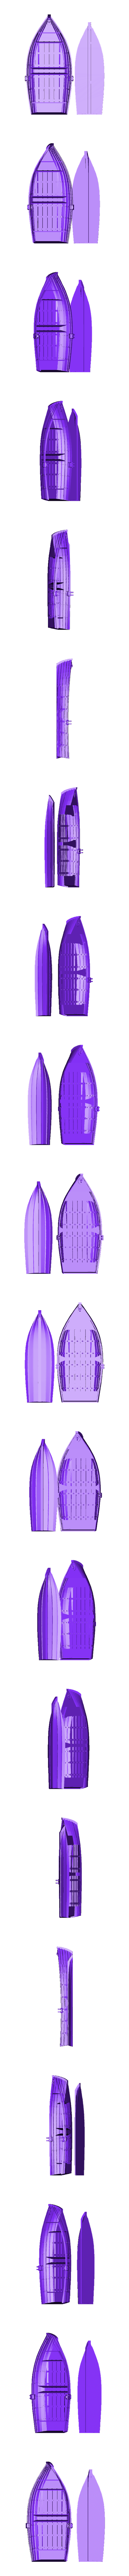 Row_Boat.PrintVariation1_FDM.RowBoat.All_Parts.stl Download STL file Row Boat • 3D printable model, TableTopMinis